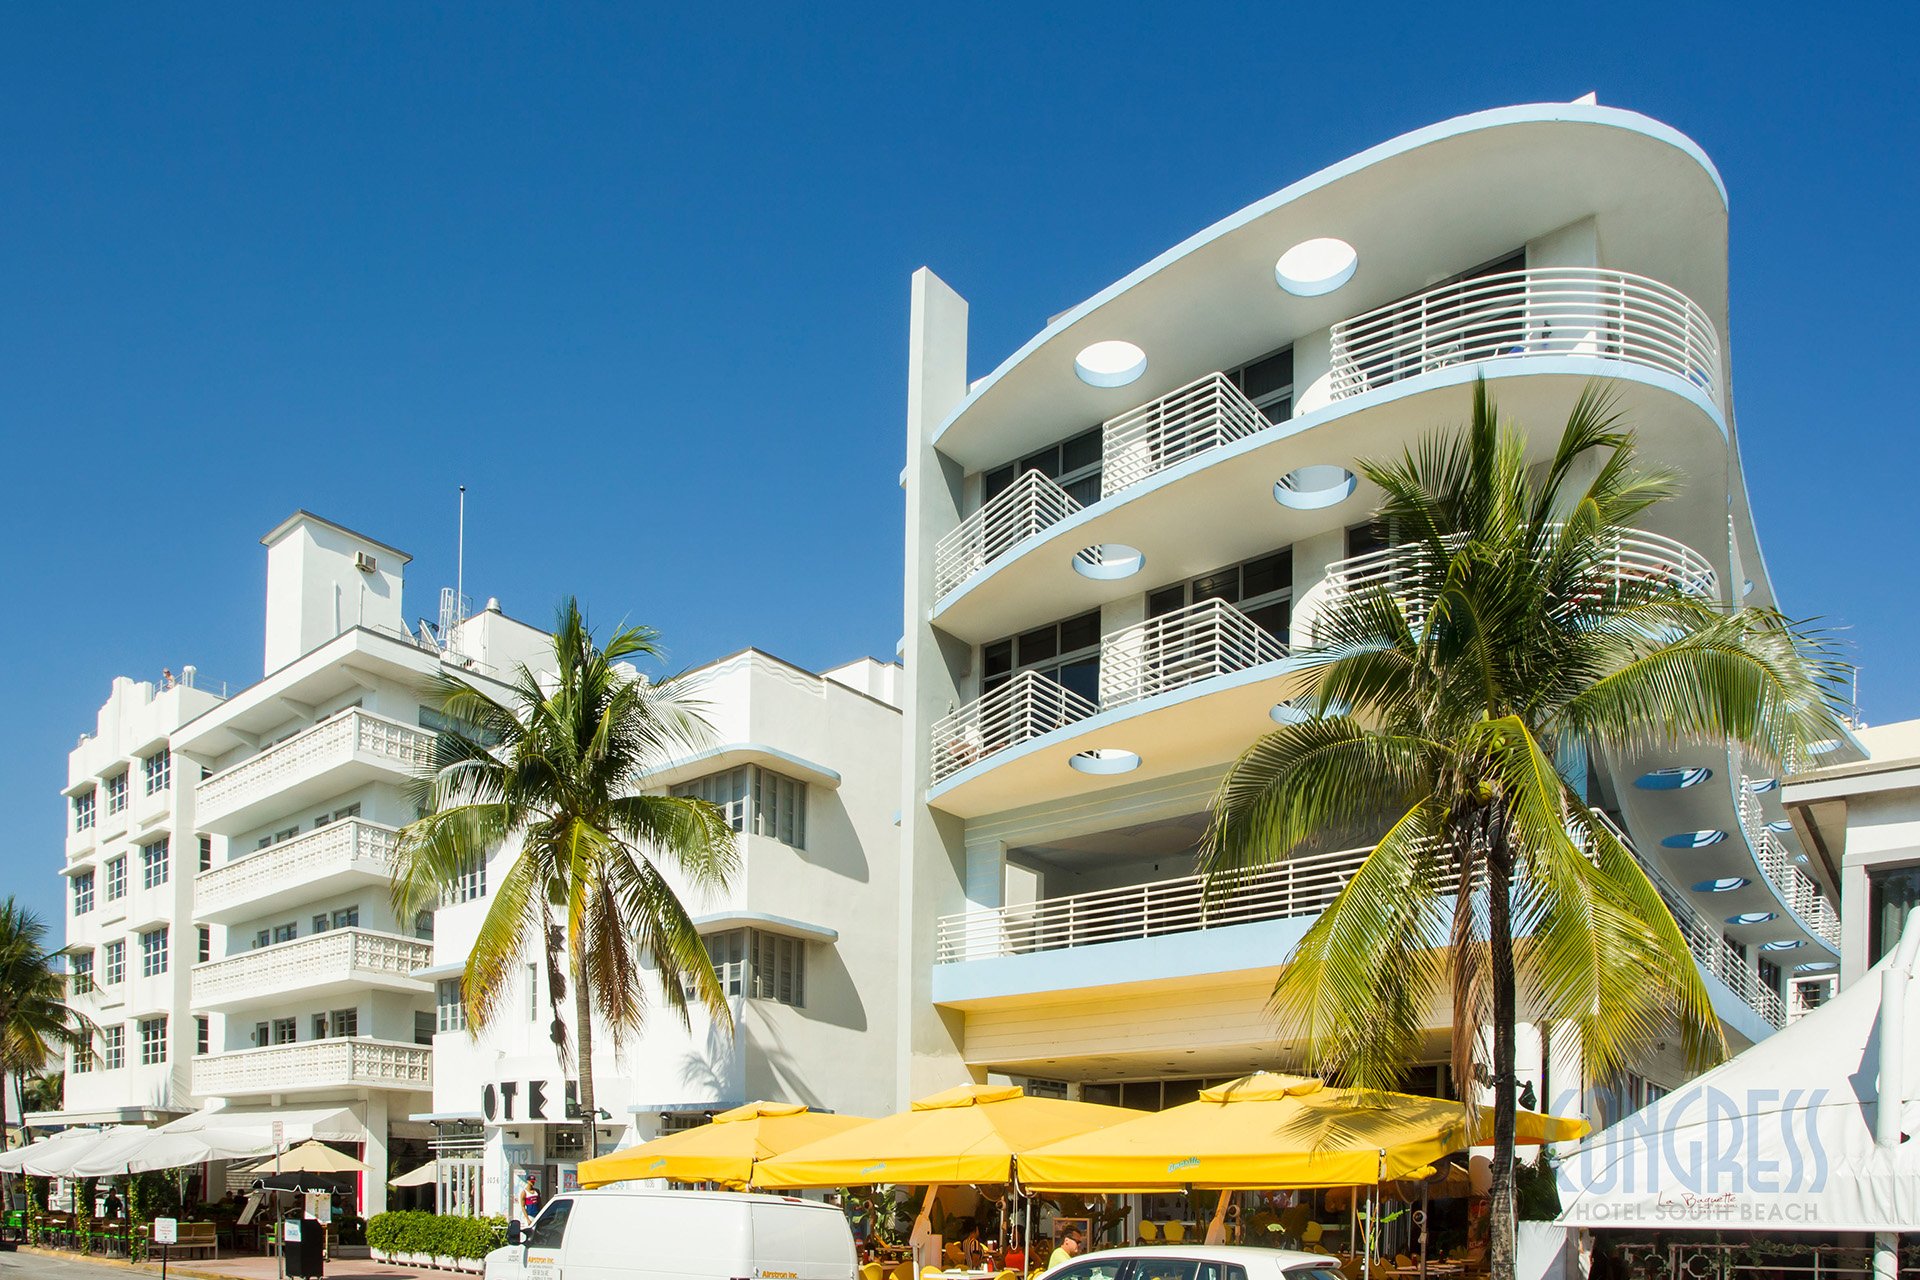 About Congress Suites Miami Beach Florida